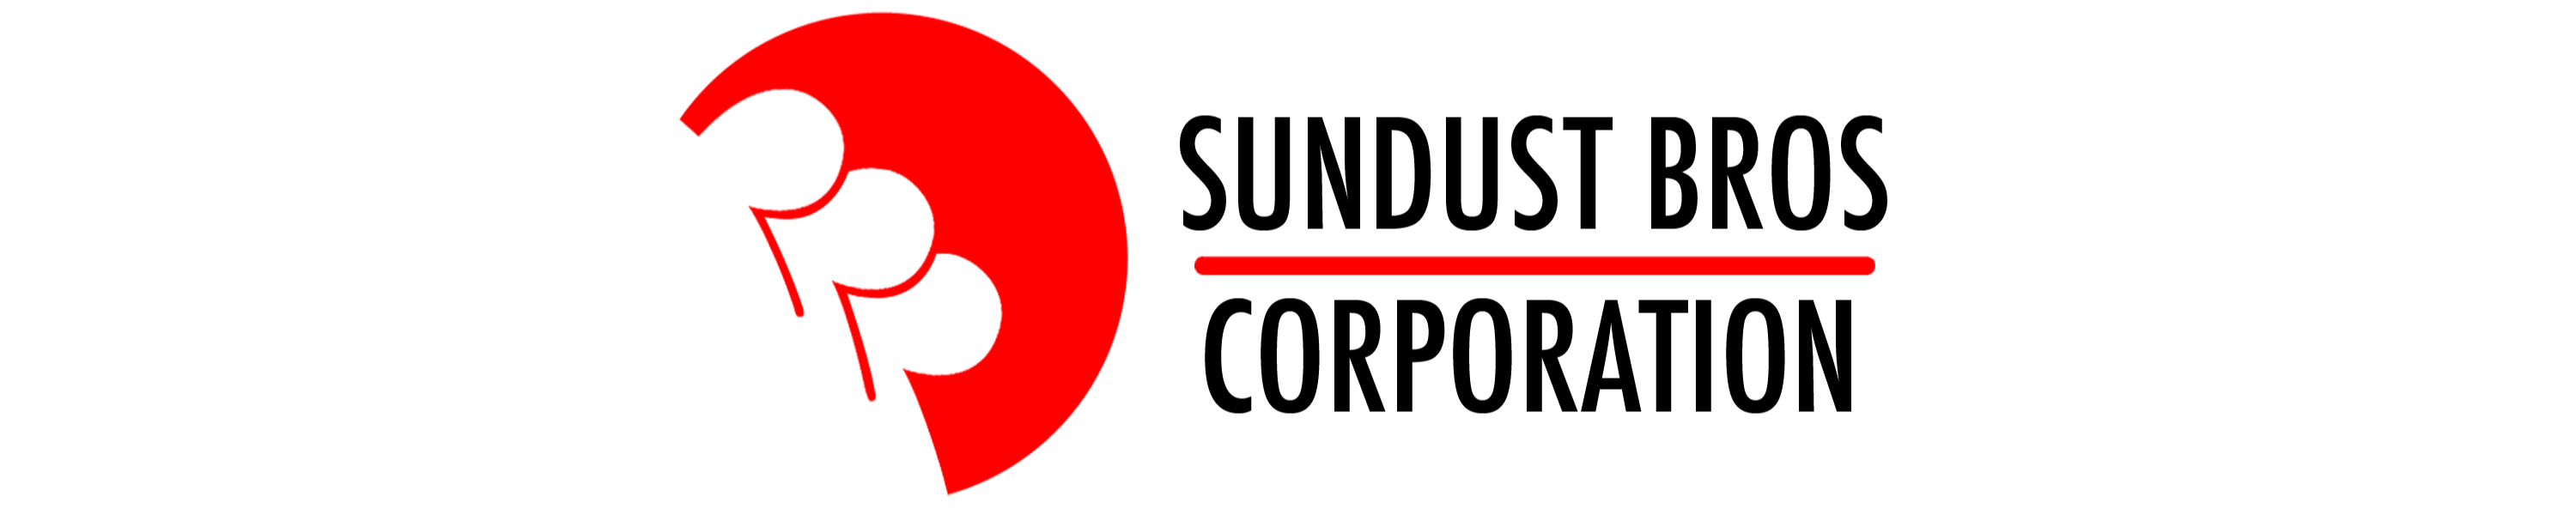 Sundust Bros Corporation banner